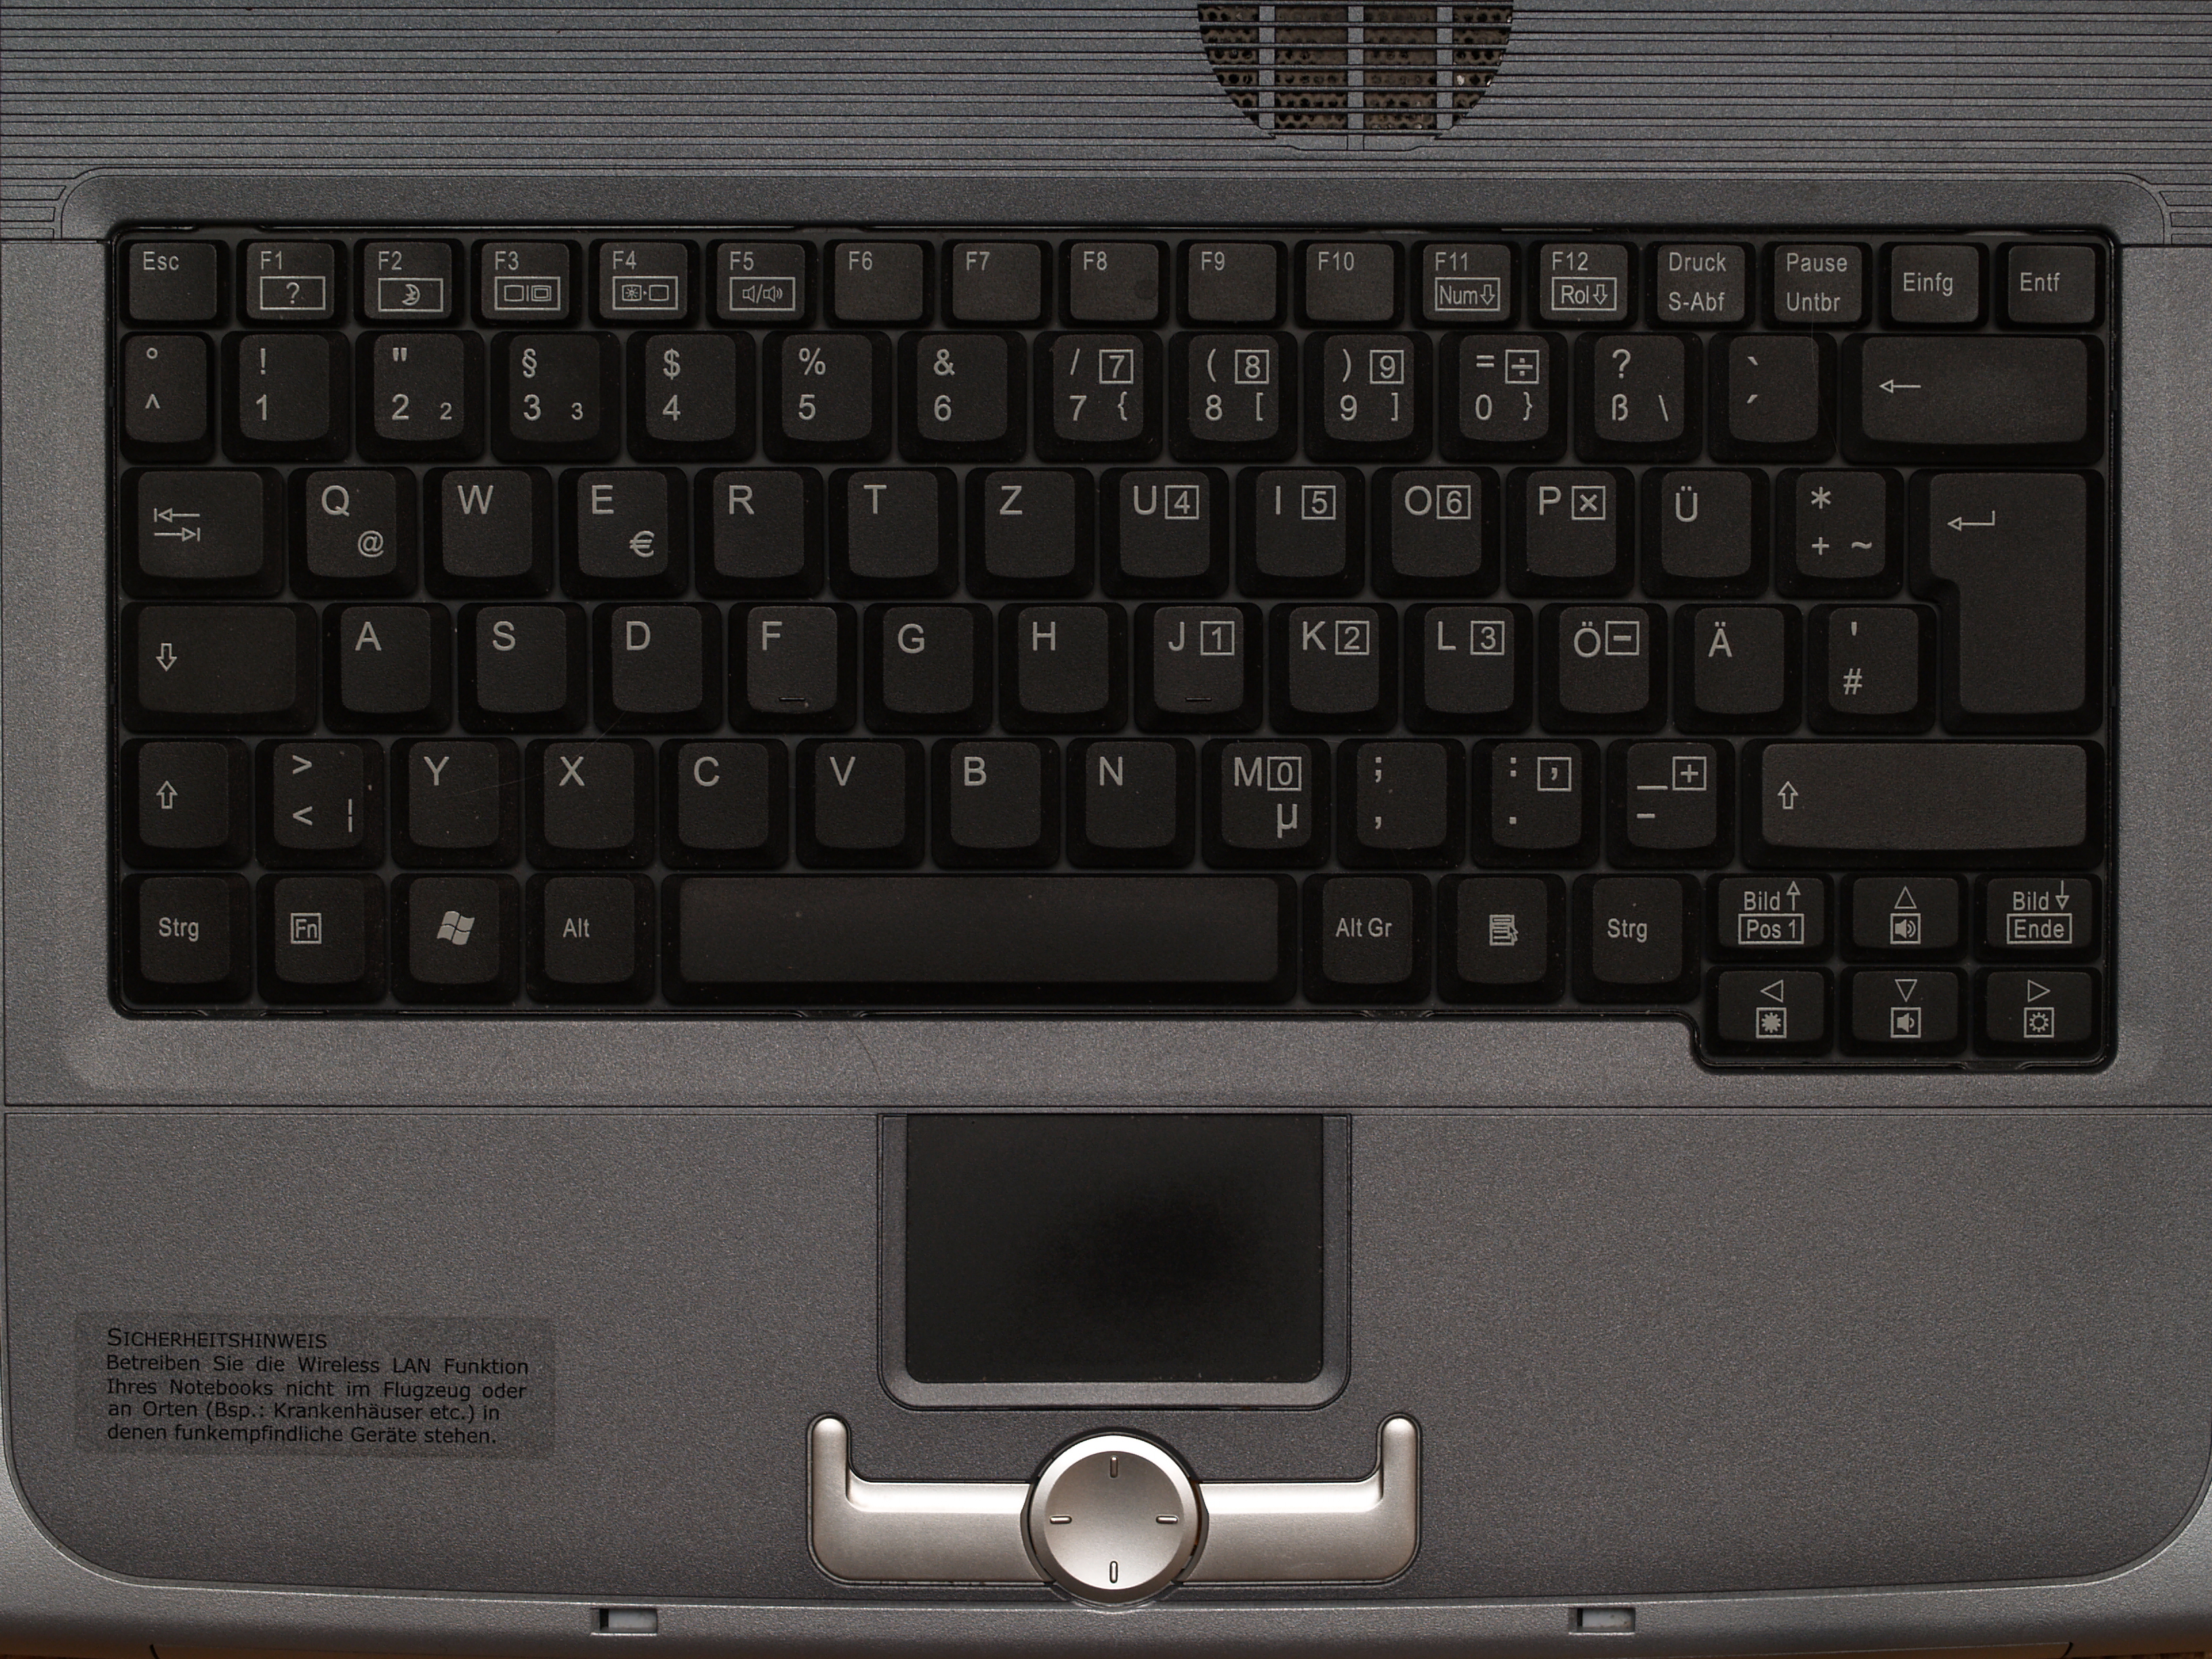 File:Keyboard on a notebook.jpg - Wikimedia Commons